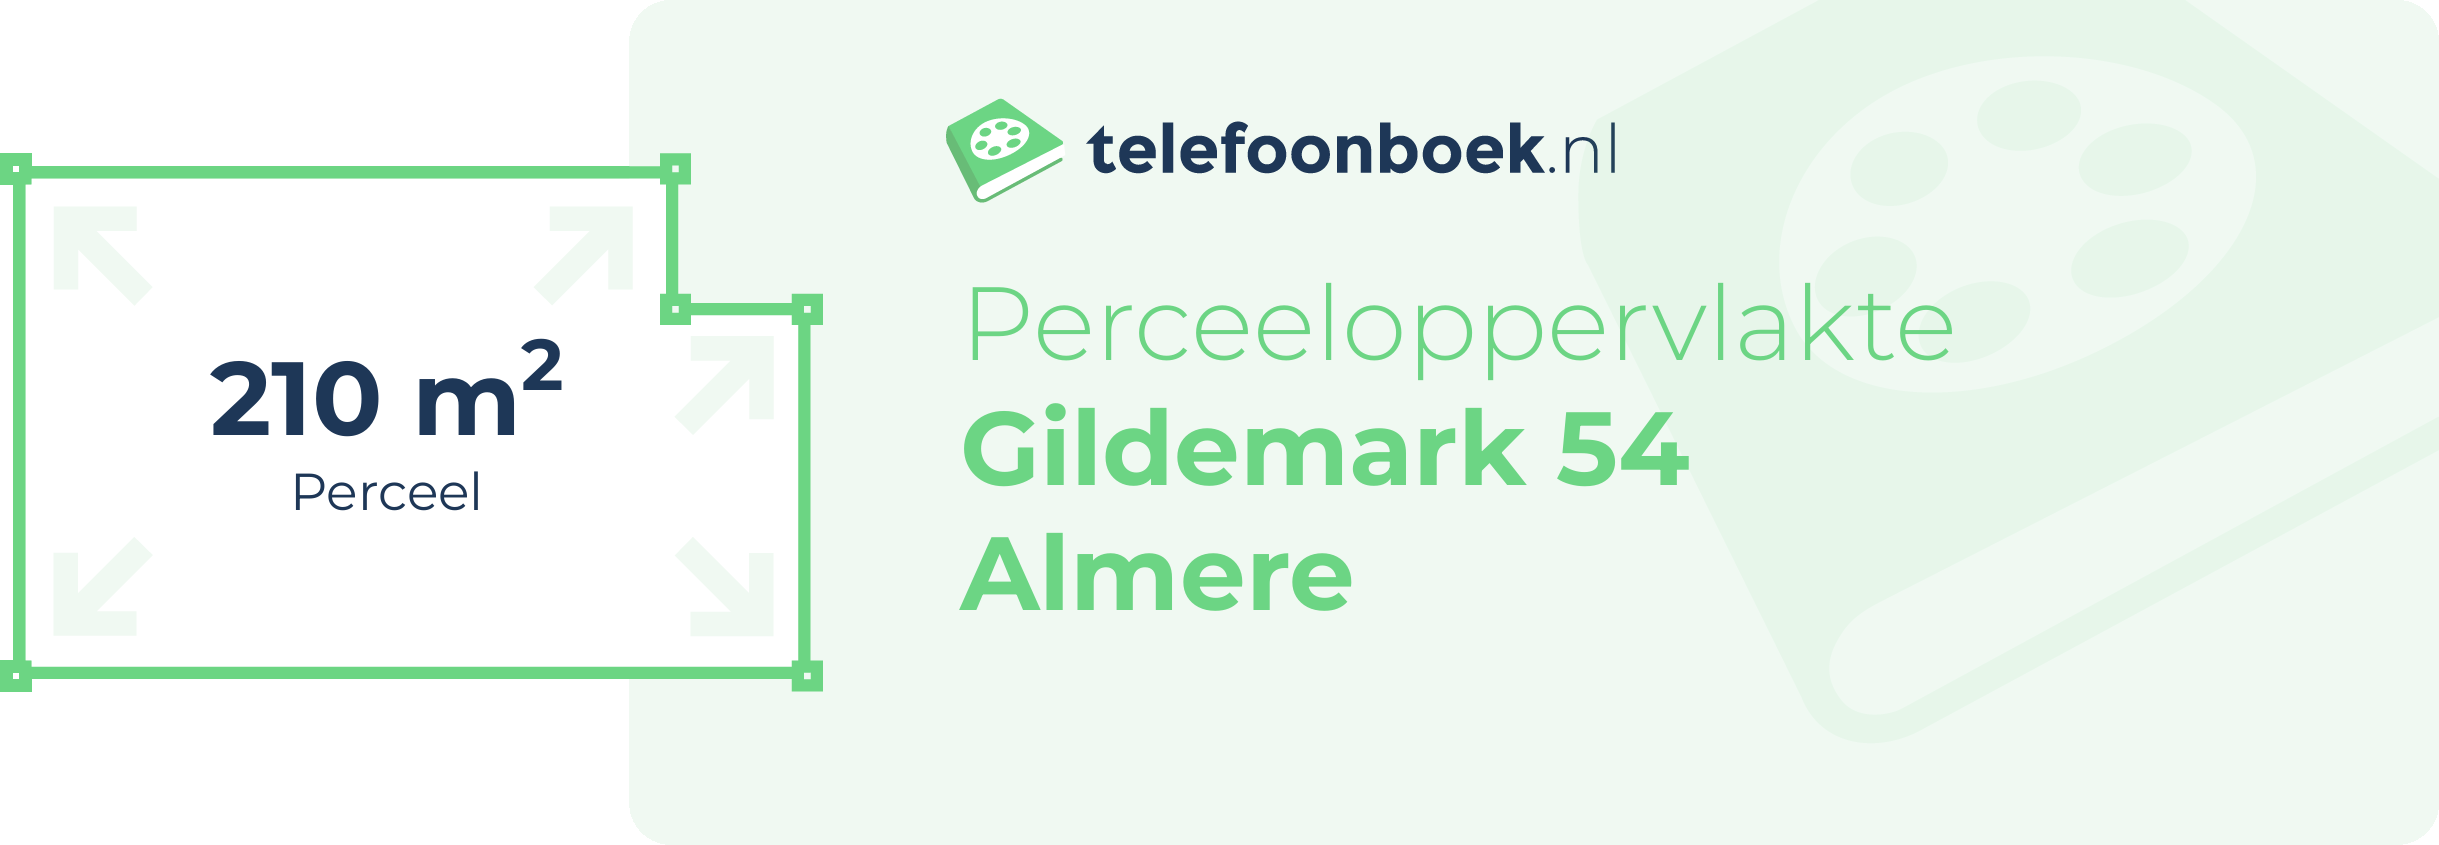 Perceeloppervlakte Gildemark 54 Almere